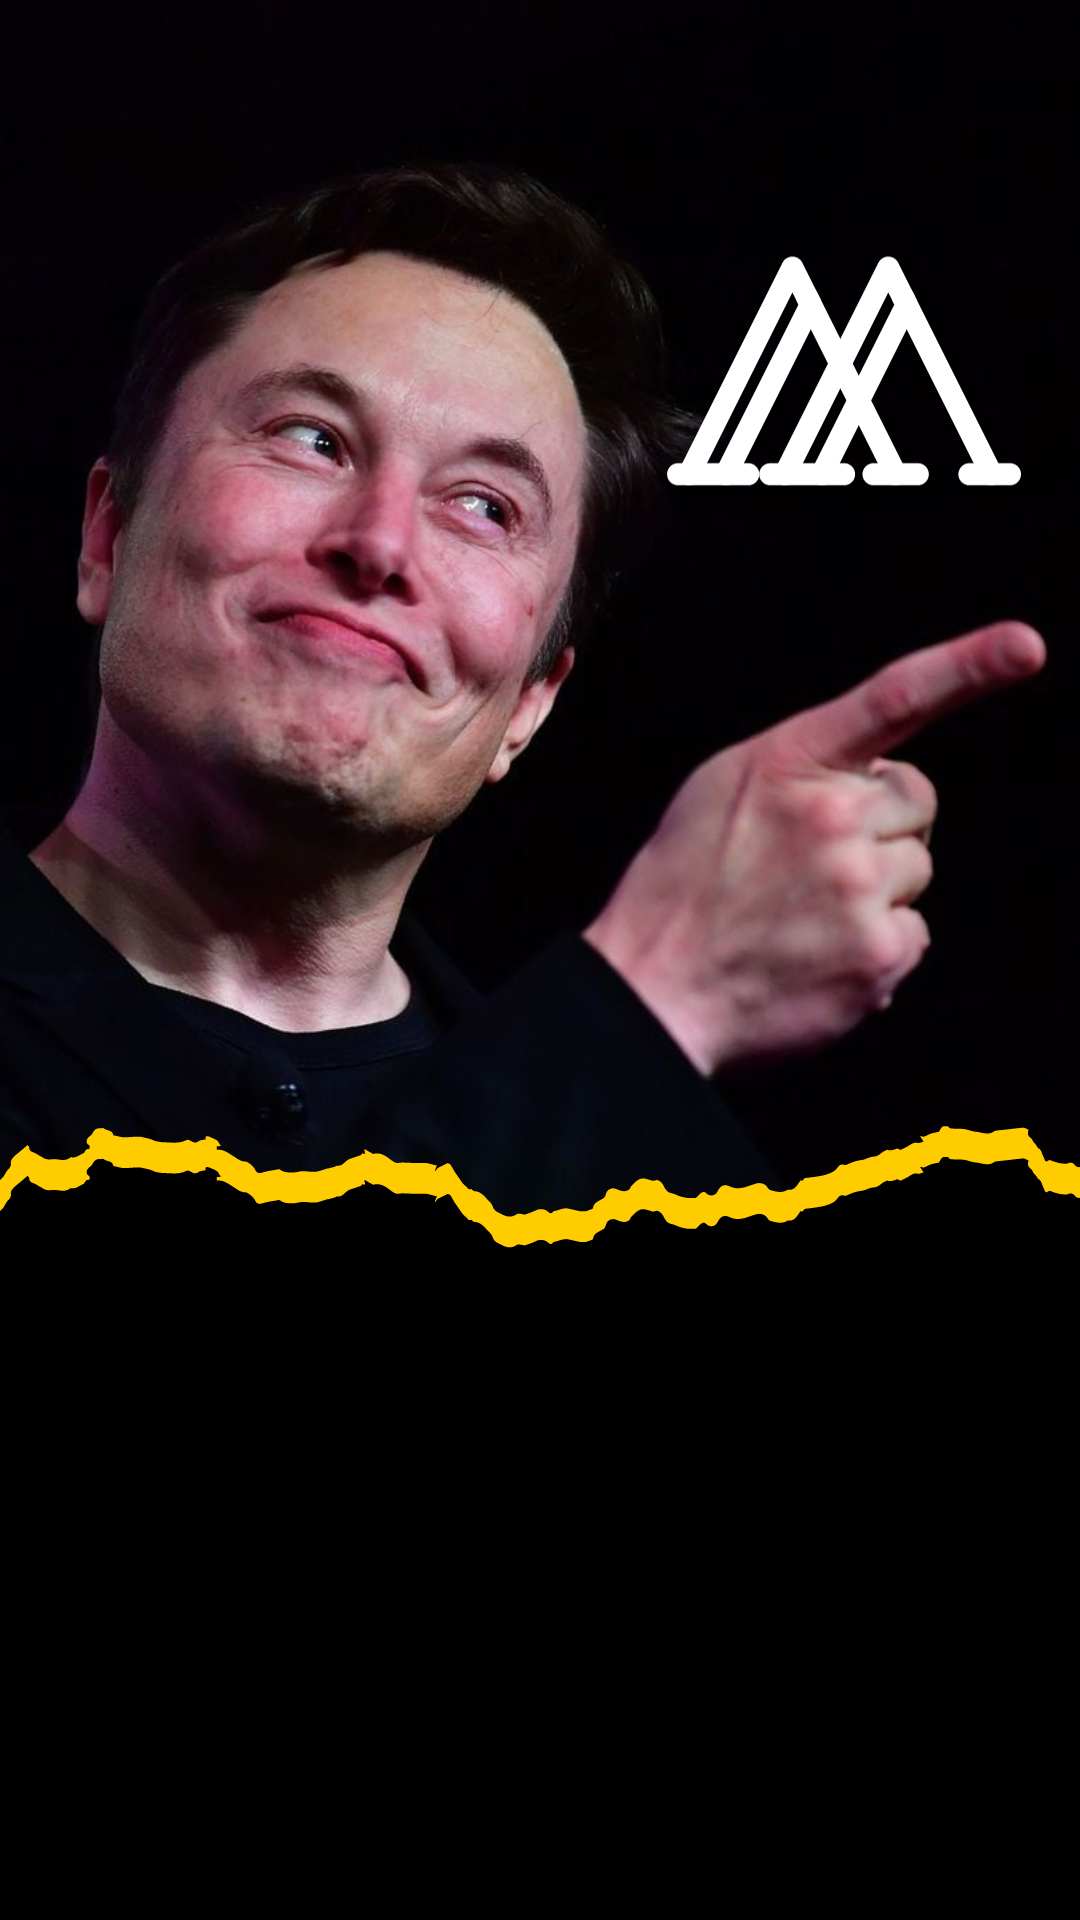 Elon Musk: Billion-dollar joke! Tesla's Elon Musk offers $1 bn to Wikipedia  for NSFW name change - The Economic Times